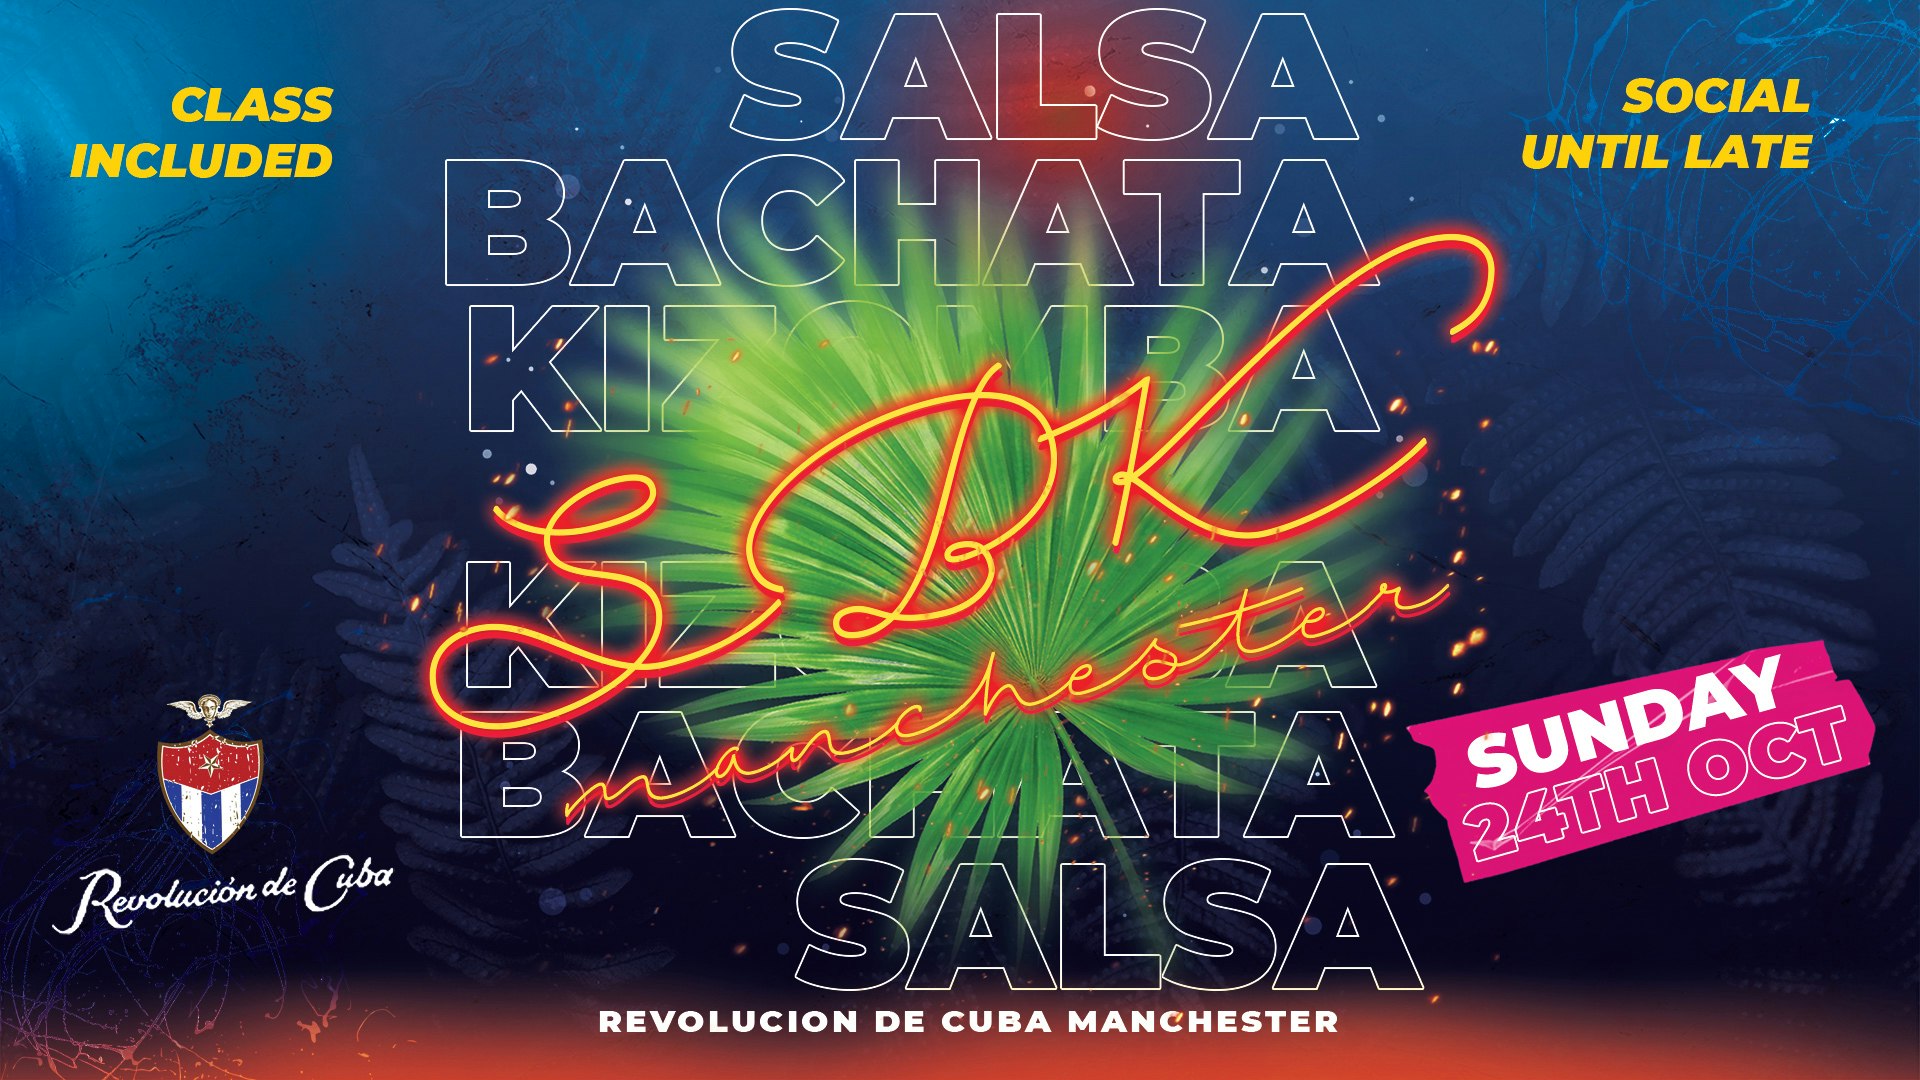 SBK MANCHESTER | Sunday 24th October – Revolucion de Cuba